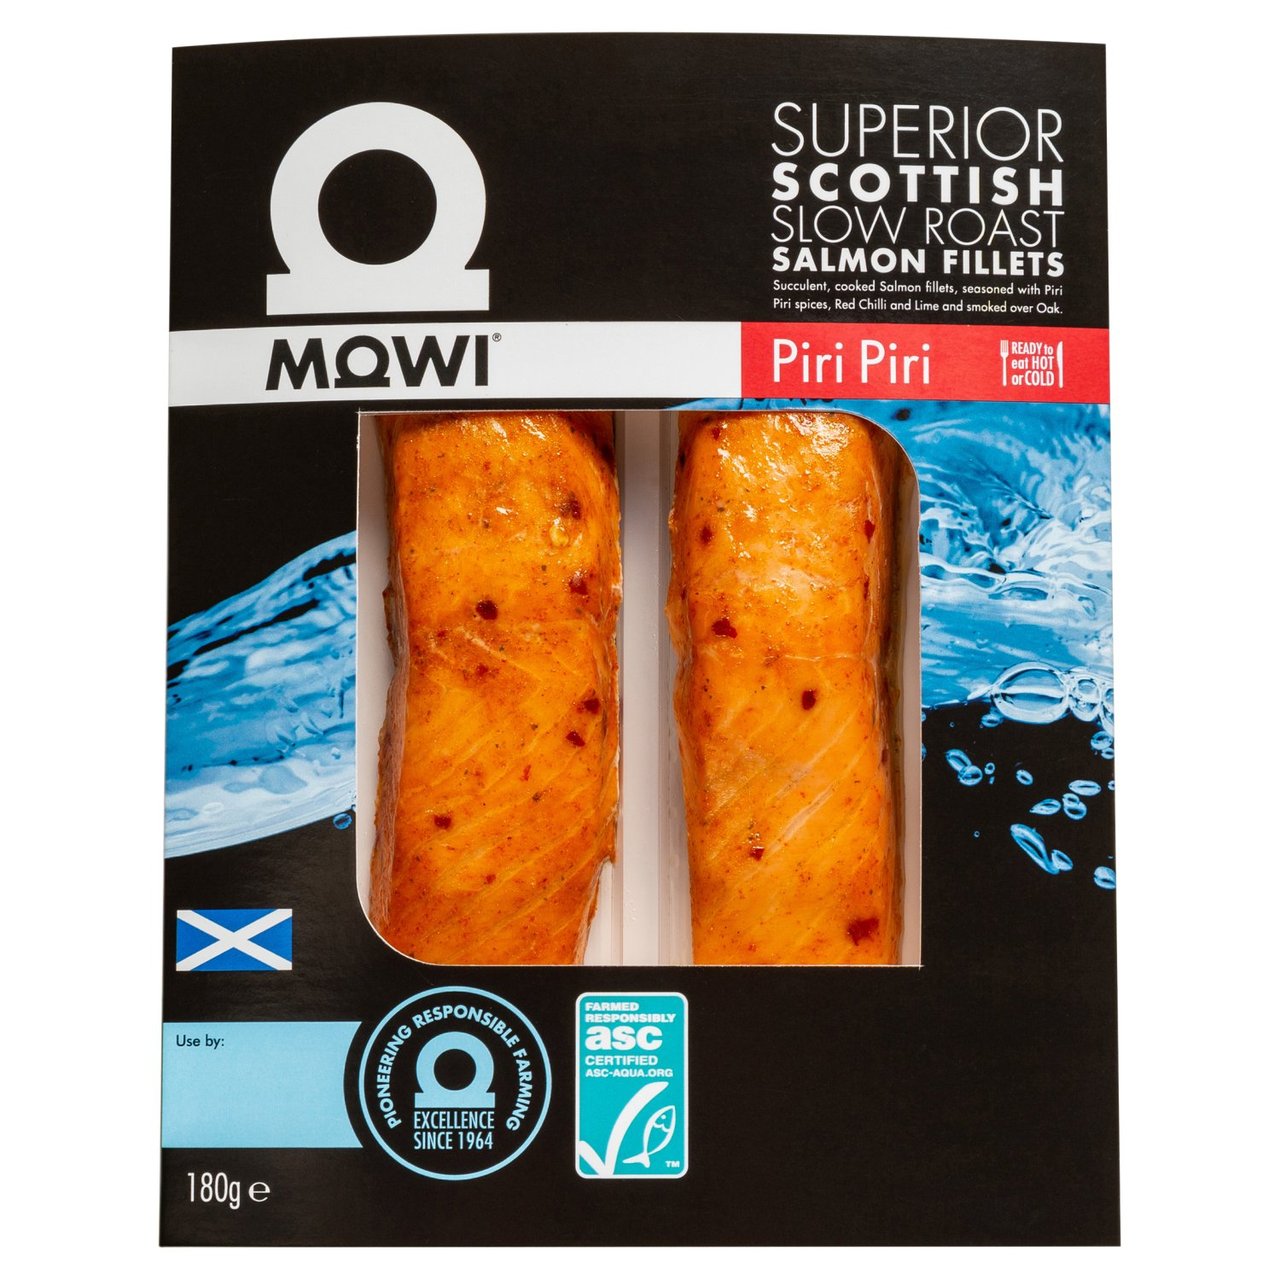 MOWI 2 Piri Piri Superior Scottish Slow Roast Salmon Fillets 180g